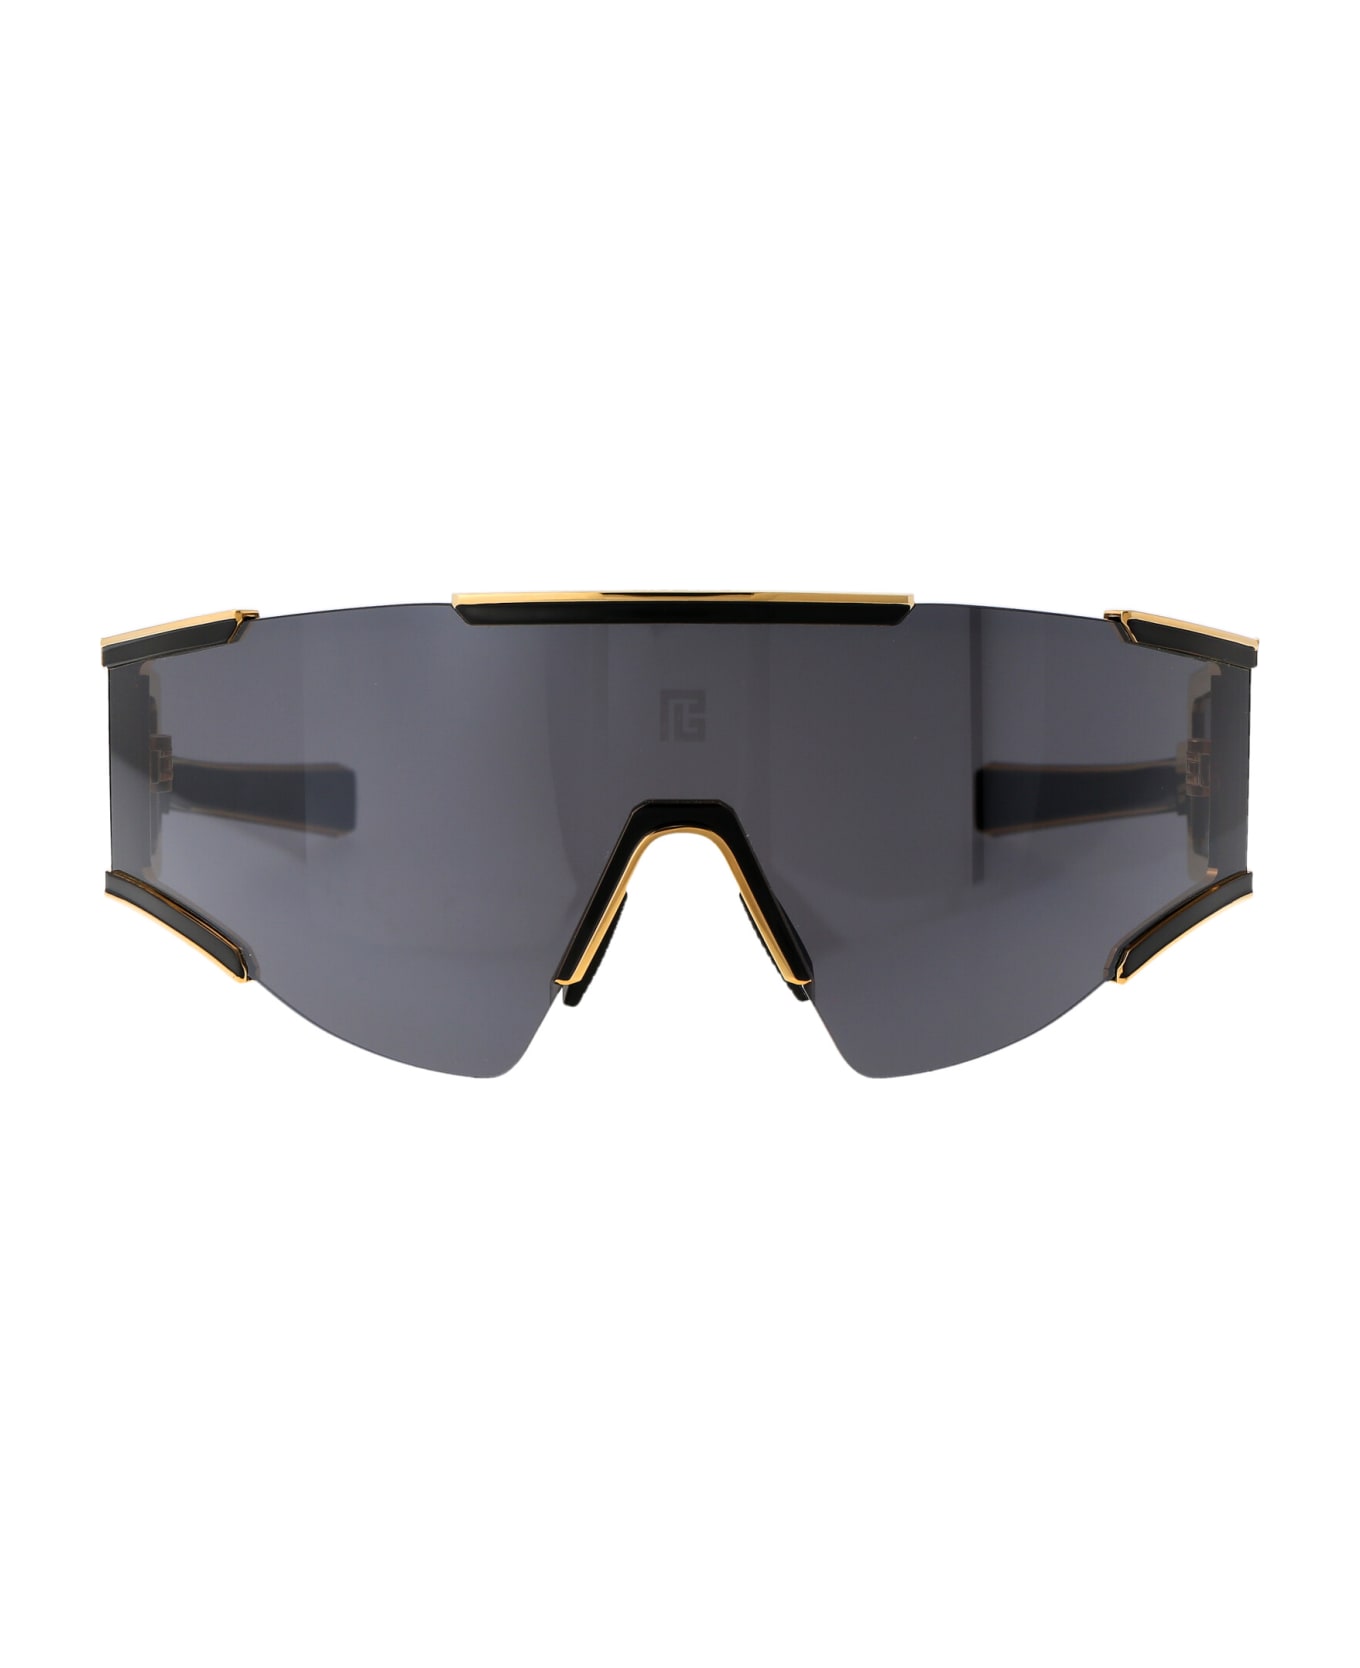 Balmain Fleche Sunglasses - 138A GLD - BLK サングラス